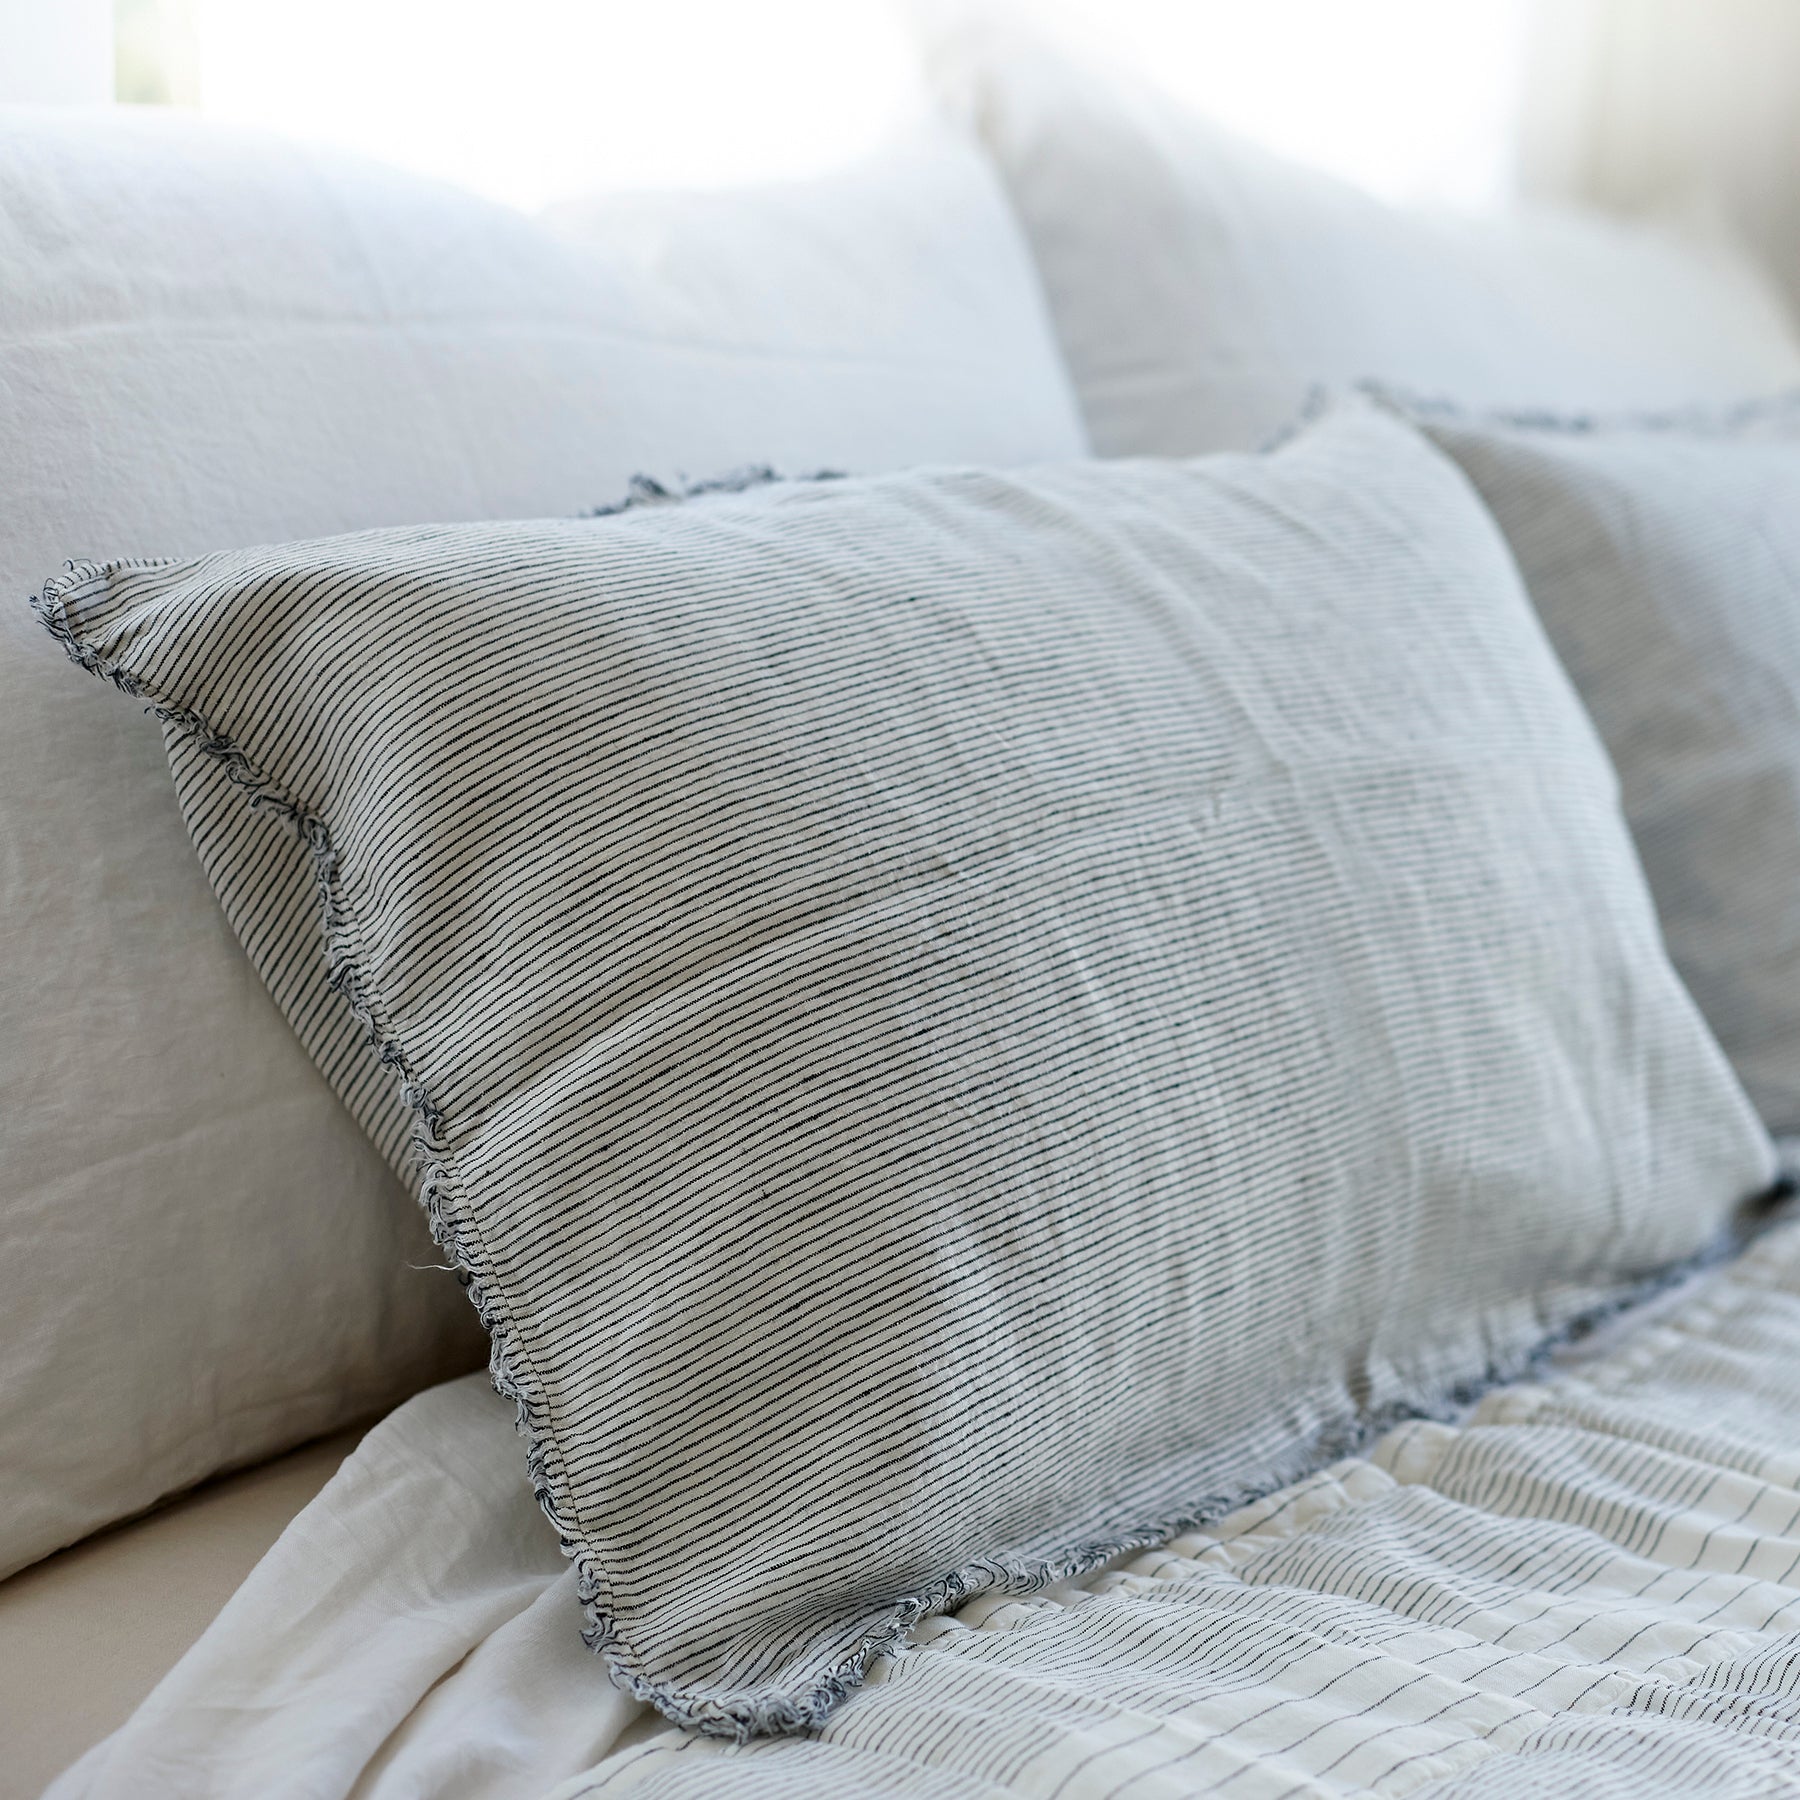 Pair of Linen Pillowcases in Pinstripe